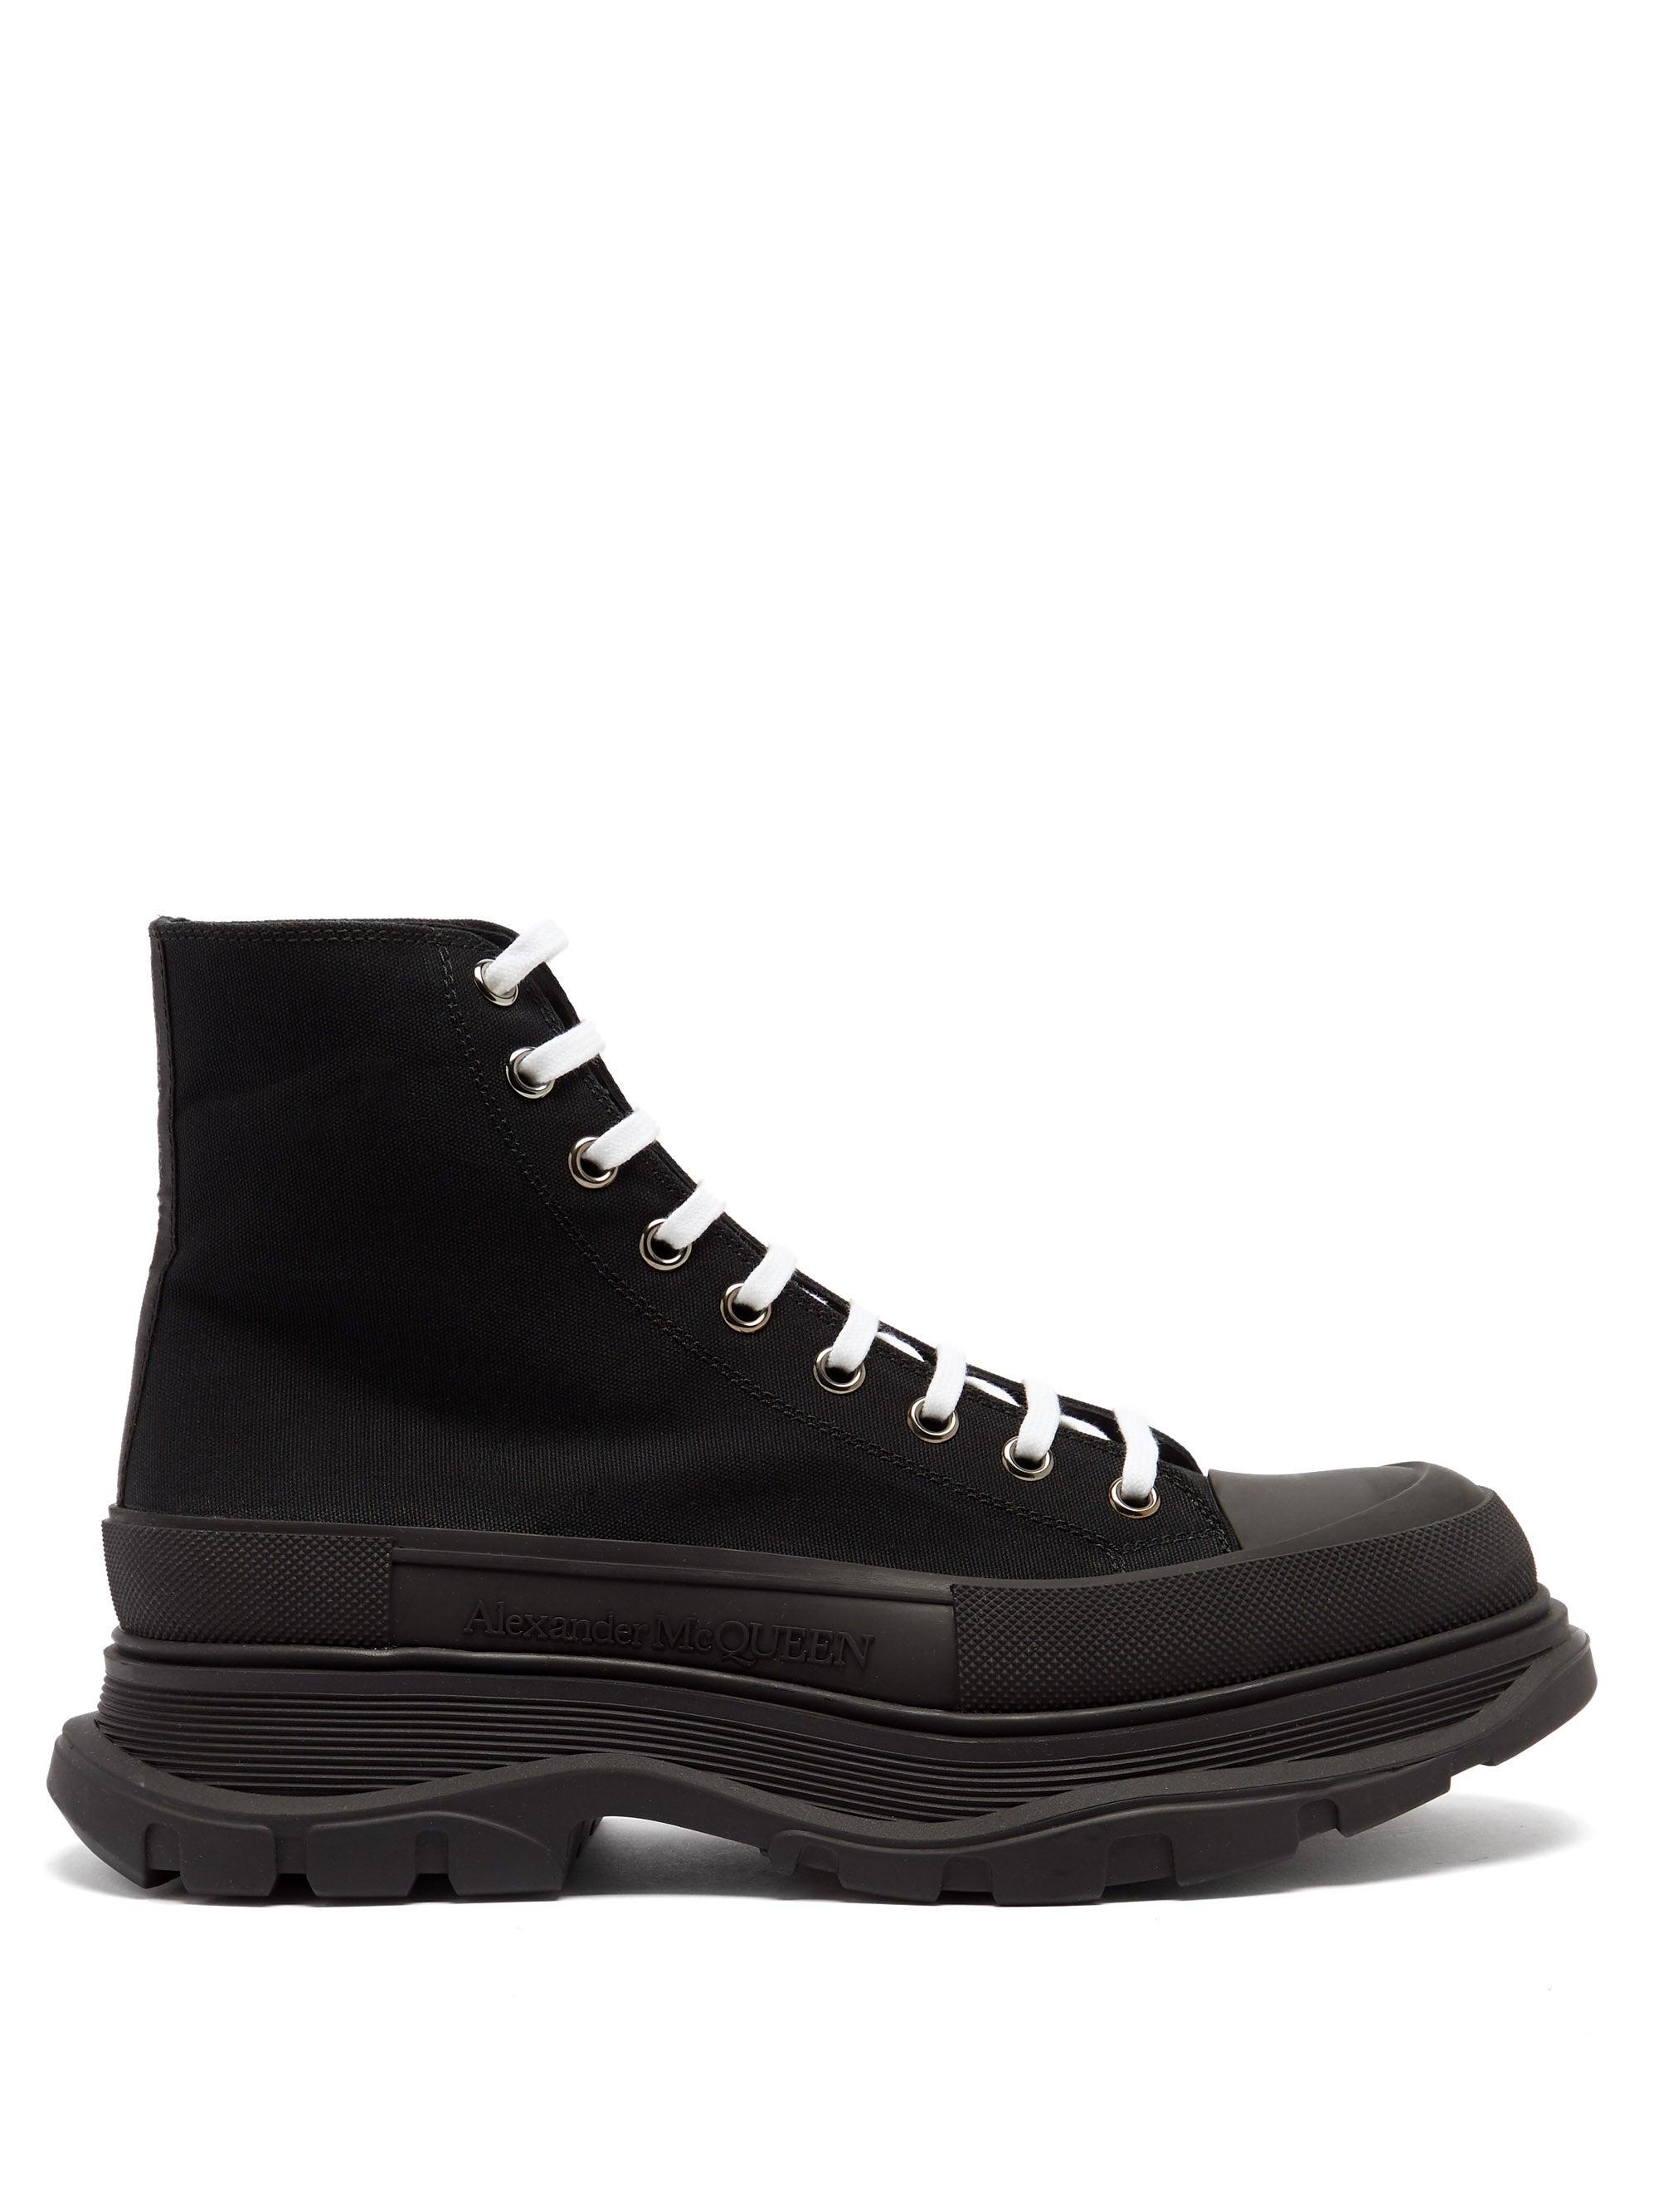 Alexander McQueen Canvas Tread Slick Boots in Black for Men - Save 